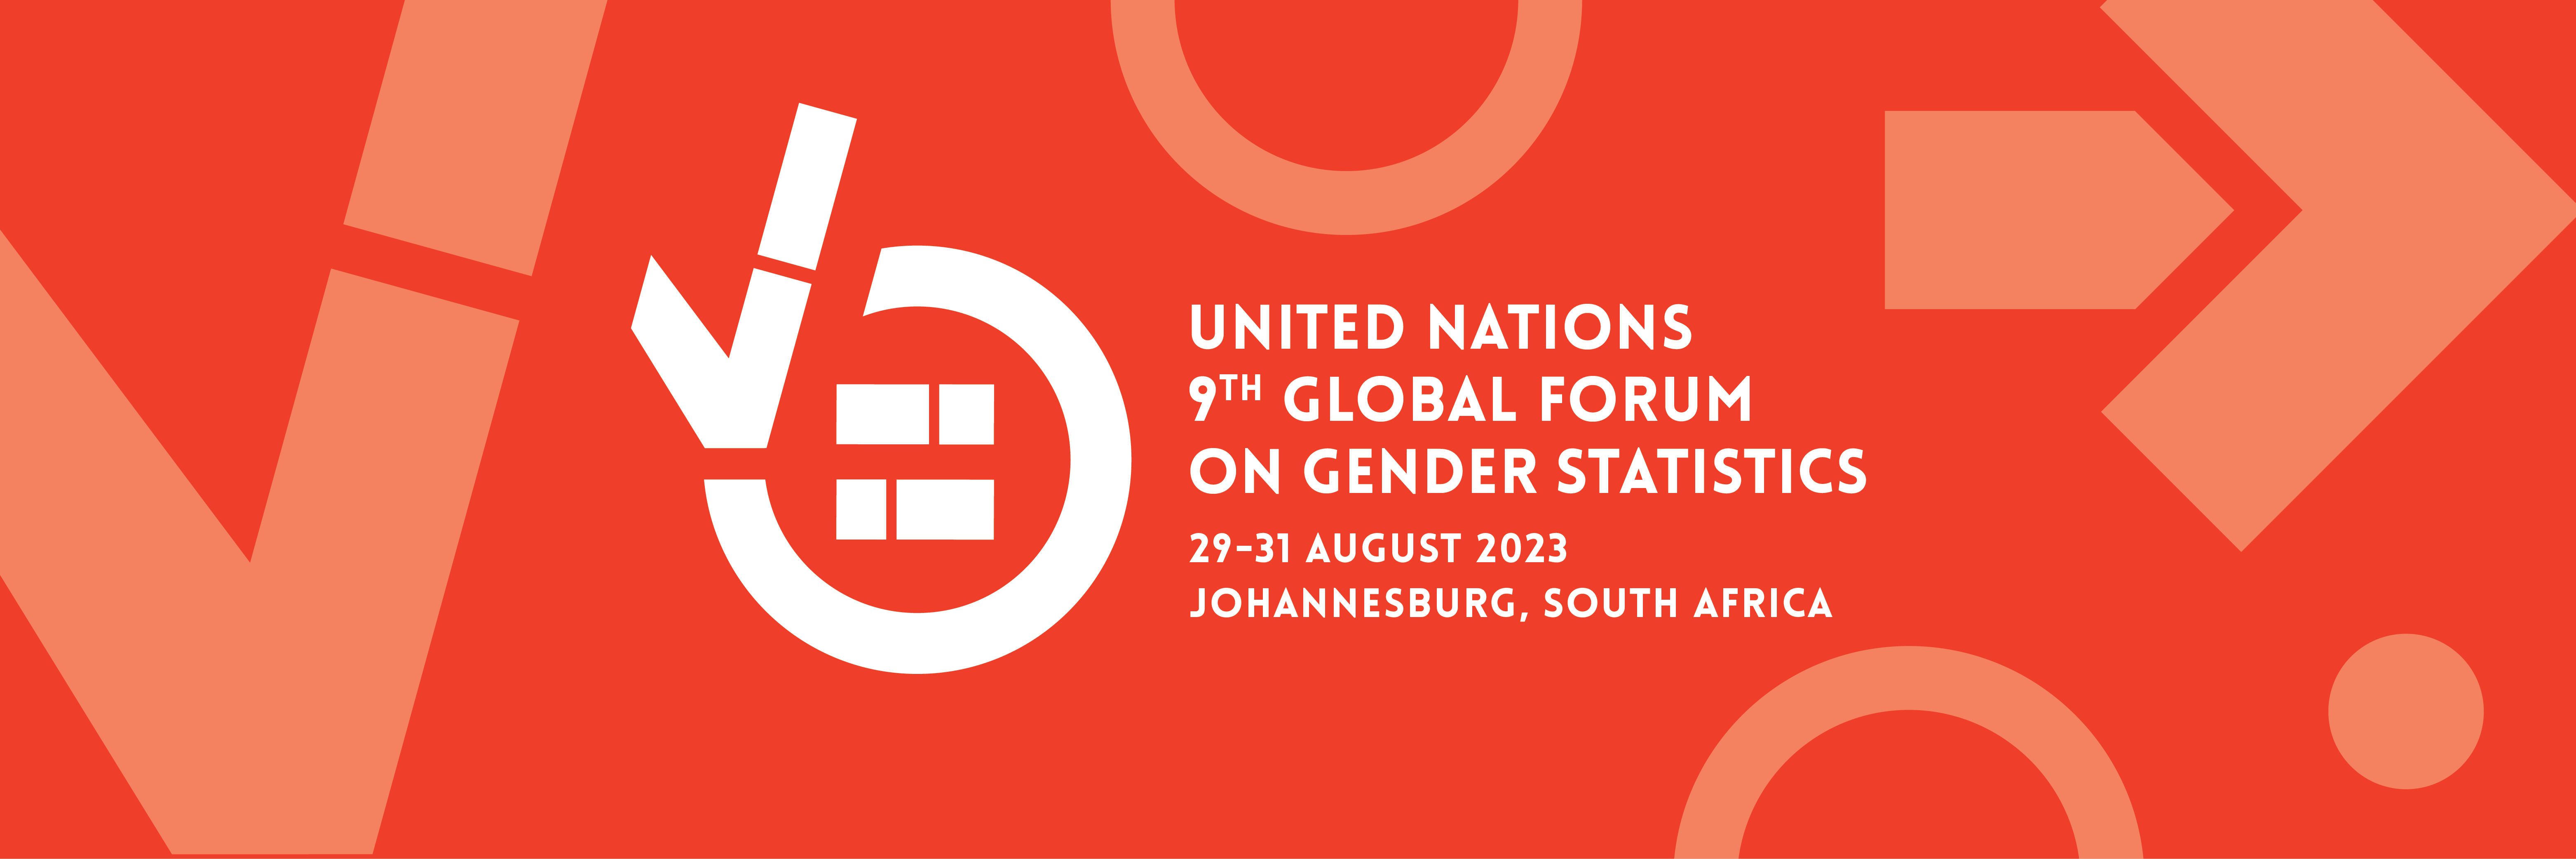 9th United Nations Global Forum on Gender Statistics